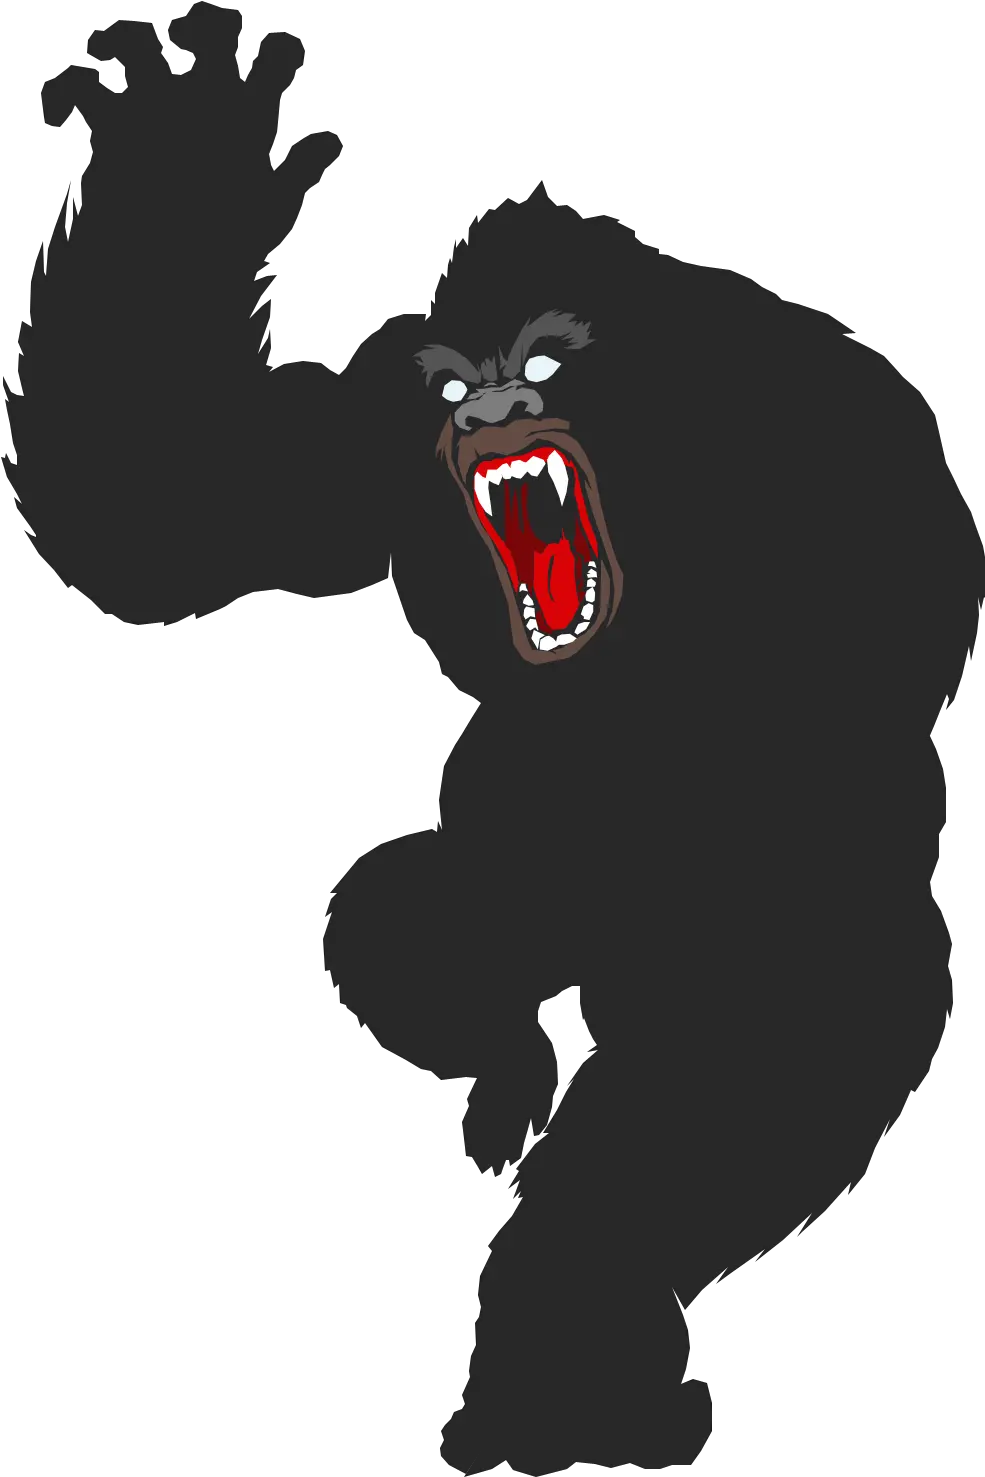 Gorilla King Kong Ape Primate Gorilla Vector Png Download Angry Gorilla Png Kong Png